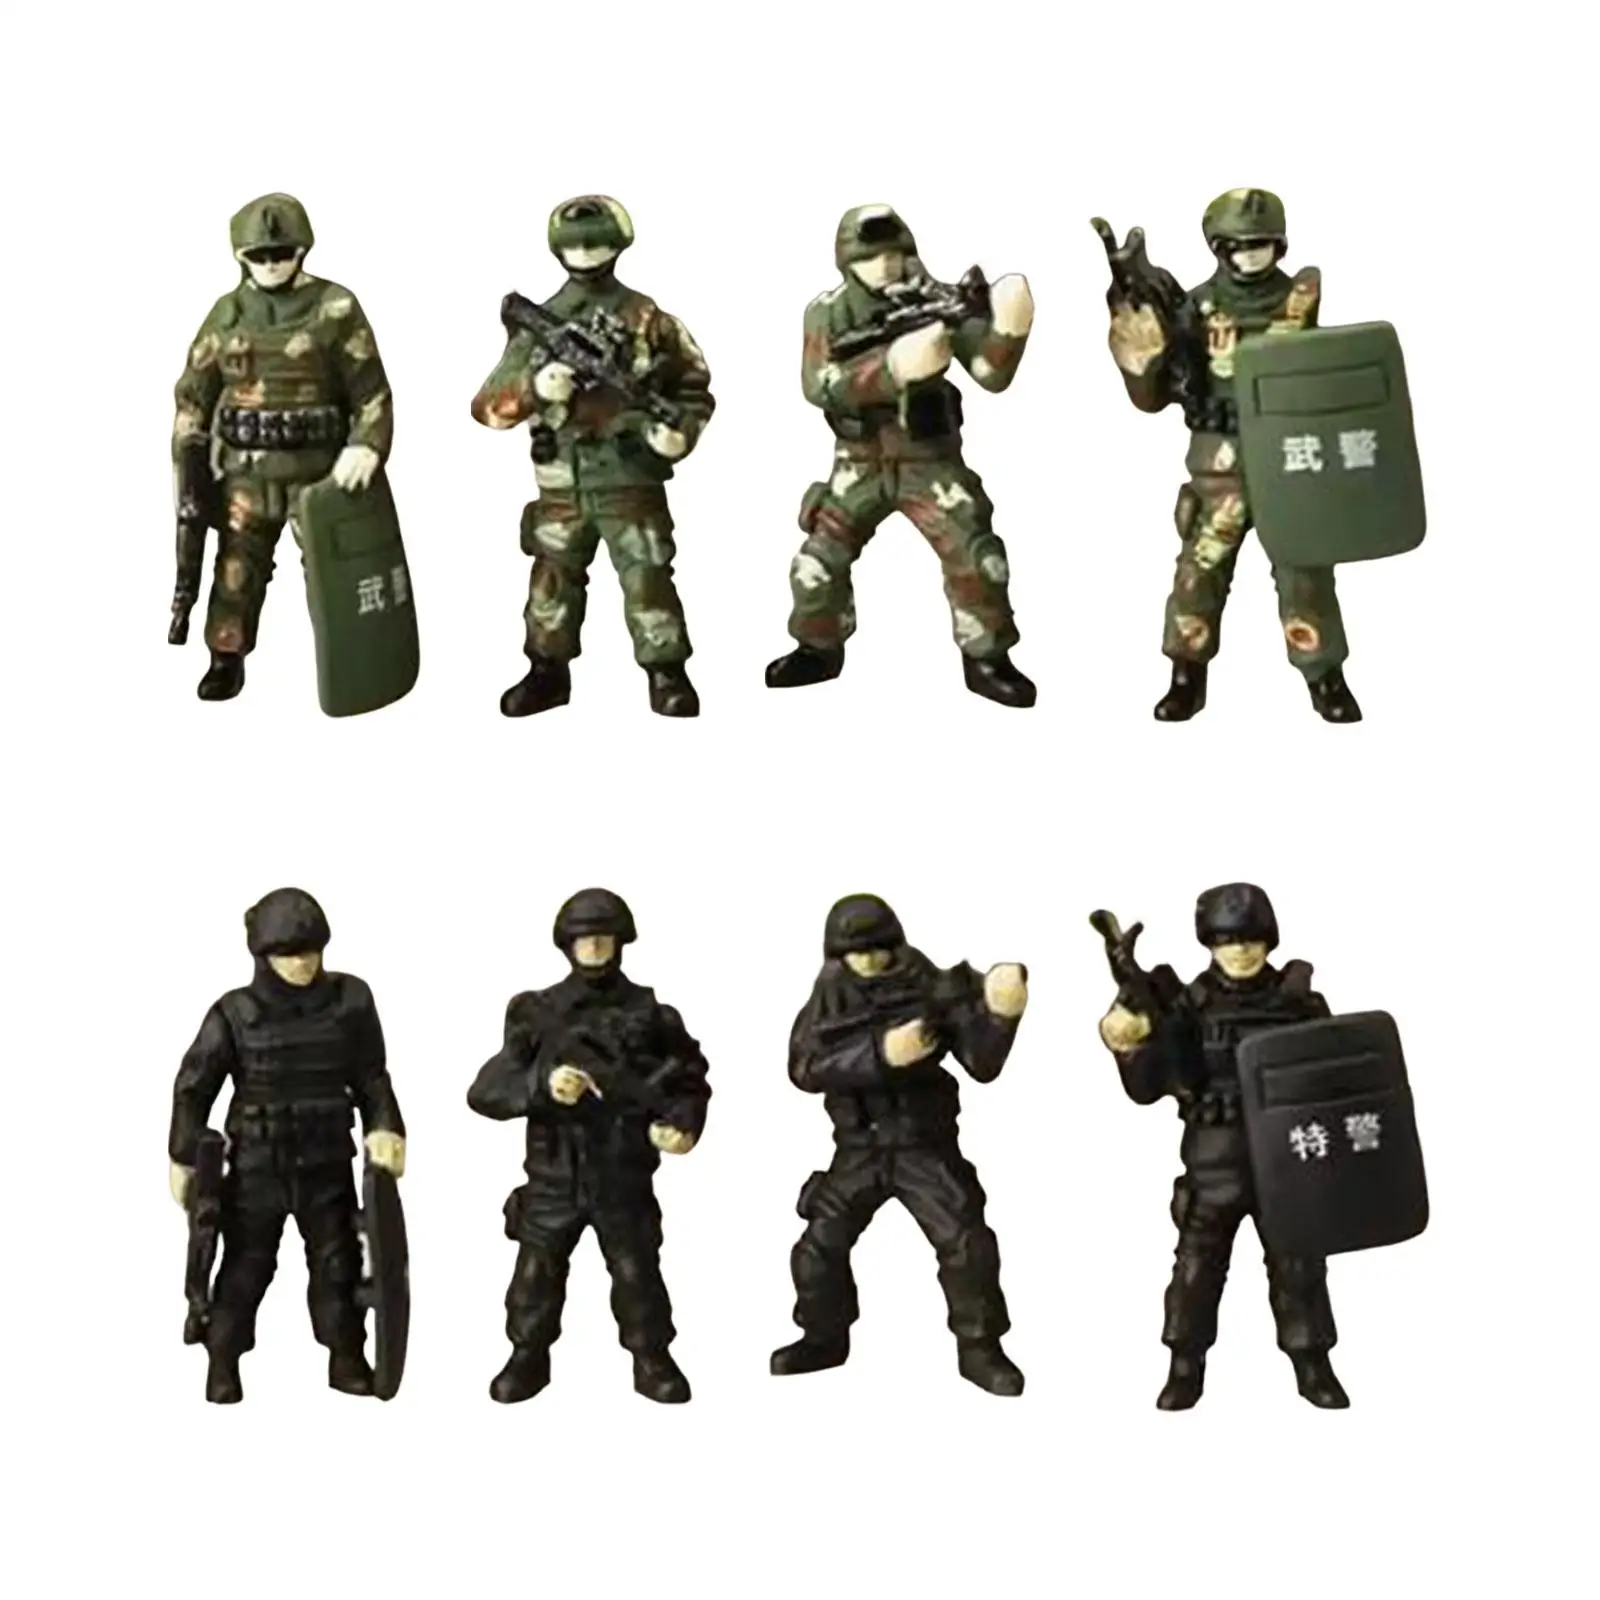 4Pcs 1/64 Miniature Figure Special Forces Model Figures Different Poses Diorama Model for Desktop Ornament DIY Projects S Gauge